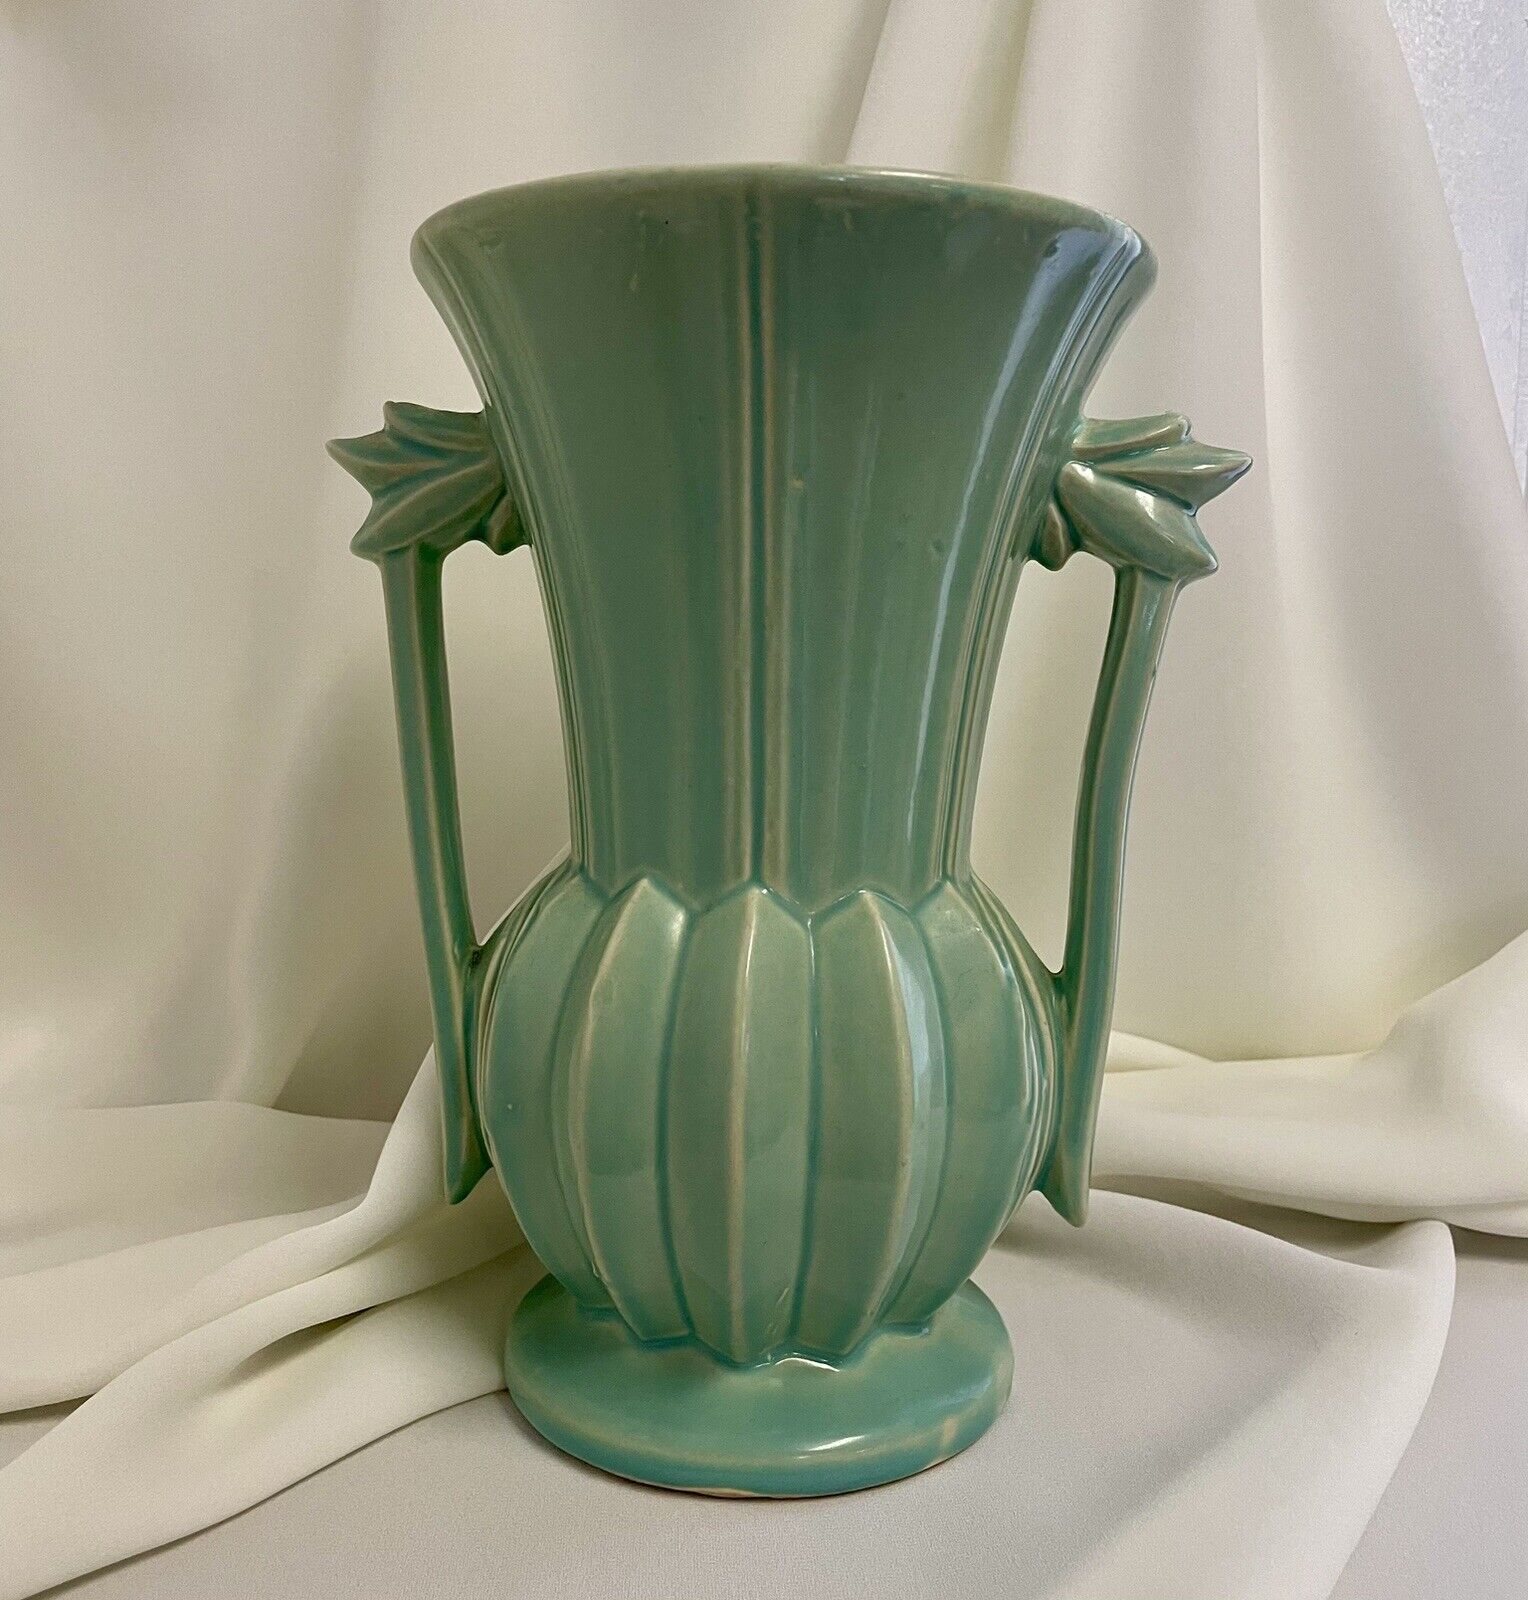 Vintage McCoy Pottery Trophy Style Double Handle Aqua/Turquoise/Teal/Green Vase